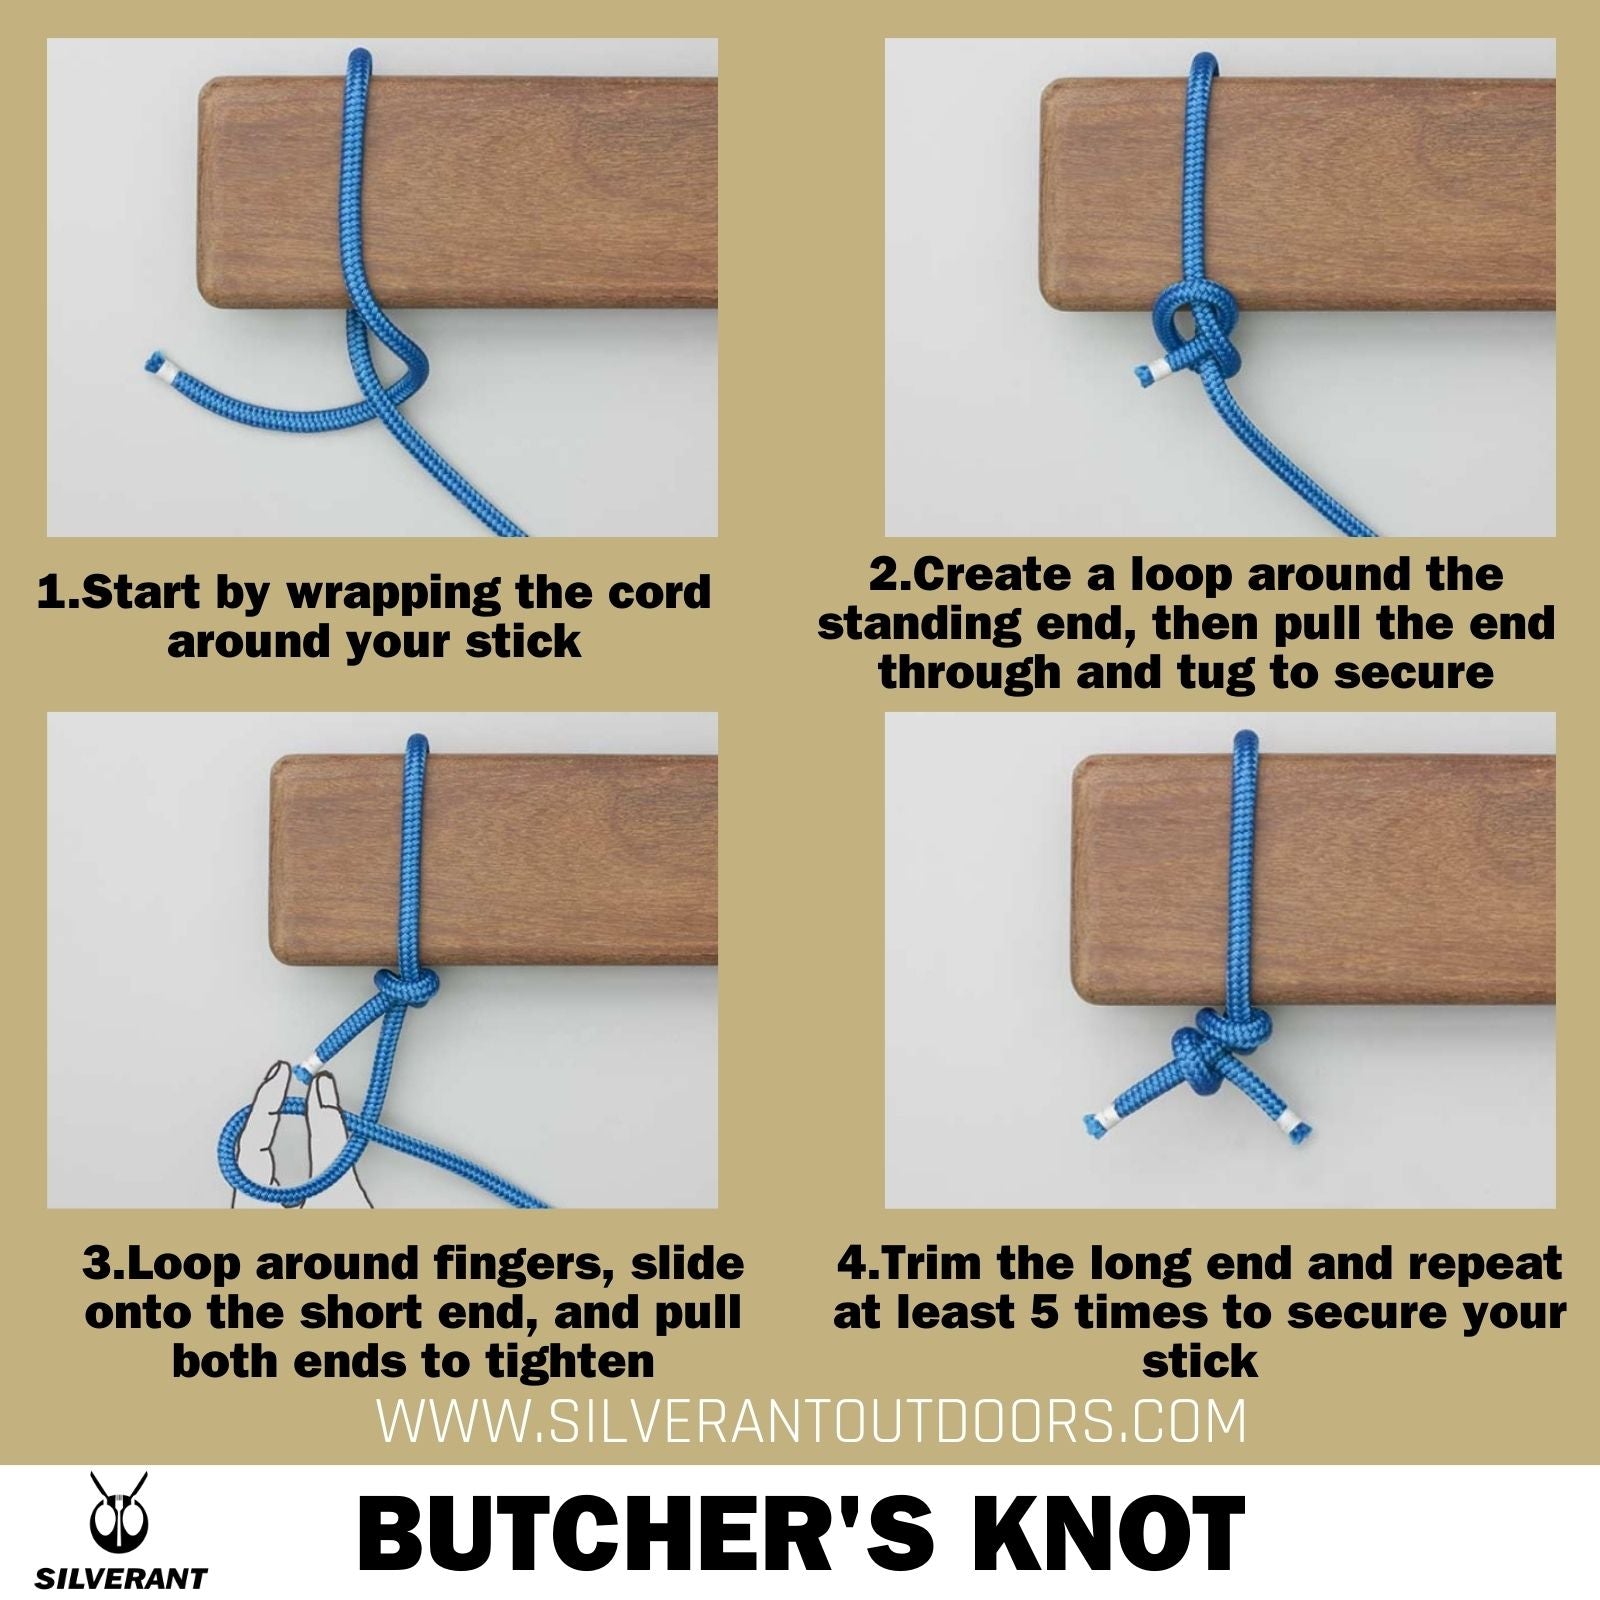 Butcher's knot